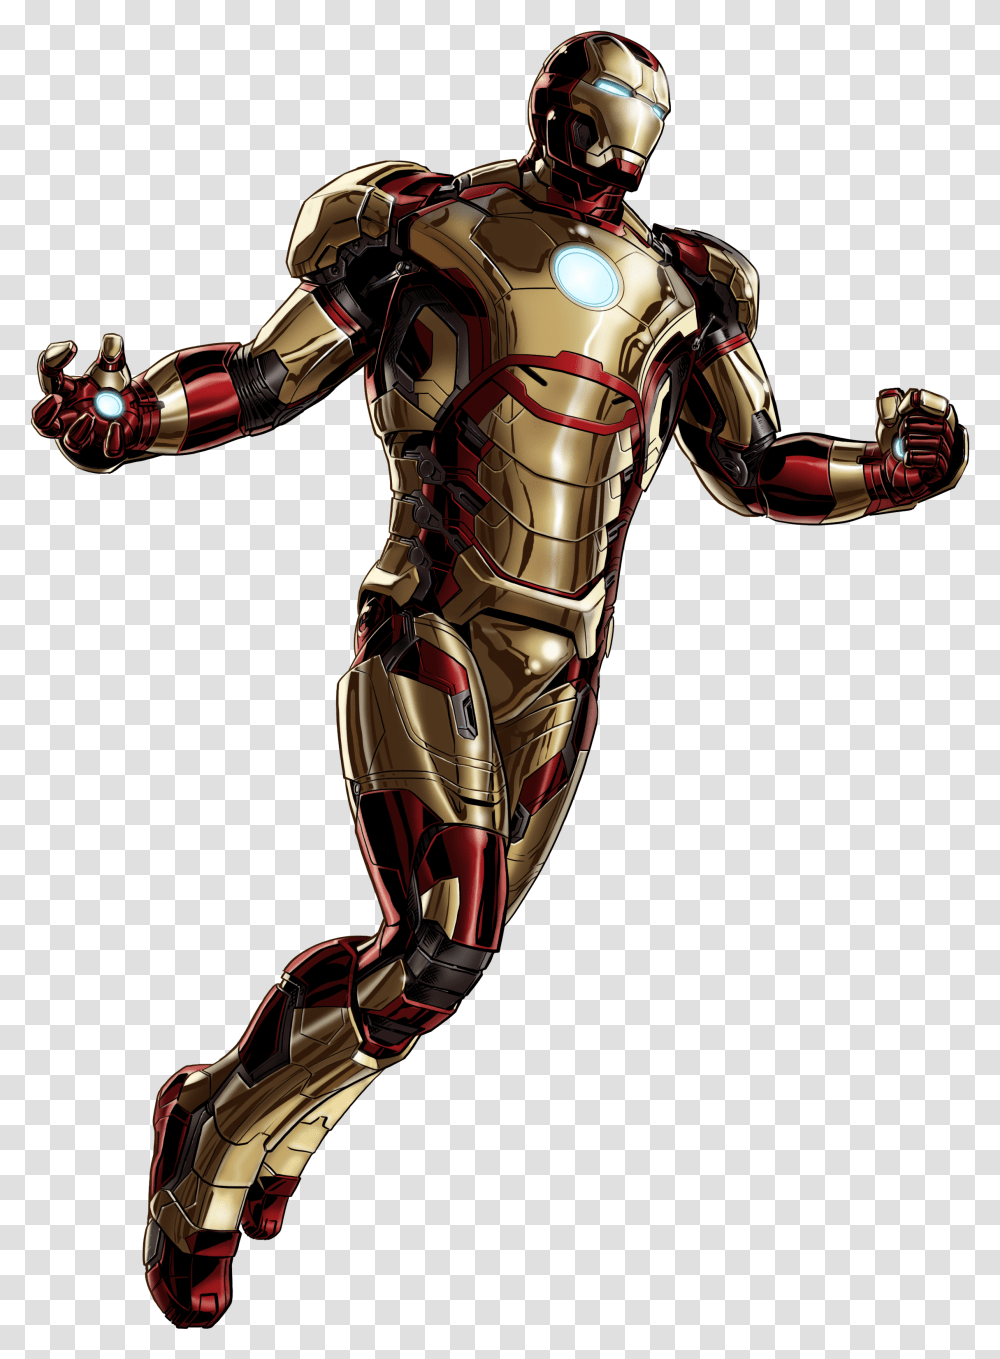 Iron Man Mk 42 Armor Portrait Art Iron Man Marvel Avengers Alliance, Robot, Person, Human, Female Transparent Png